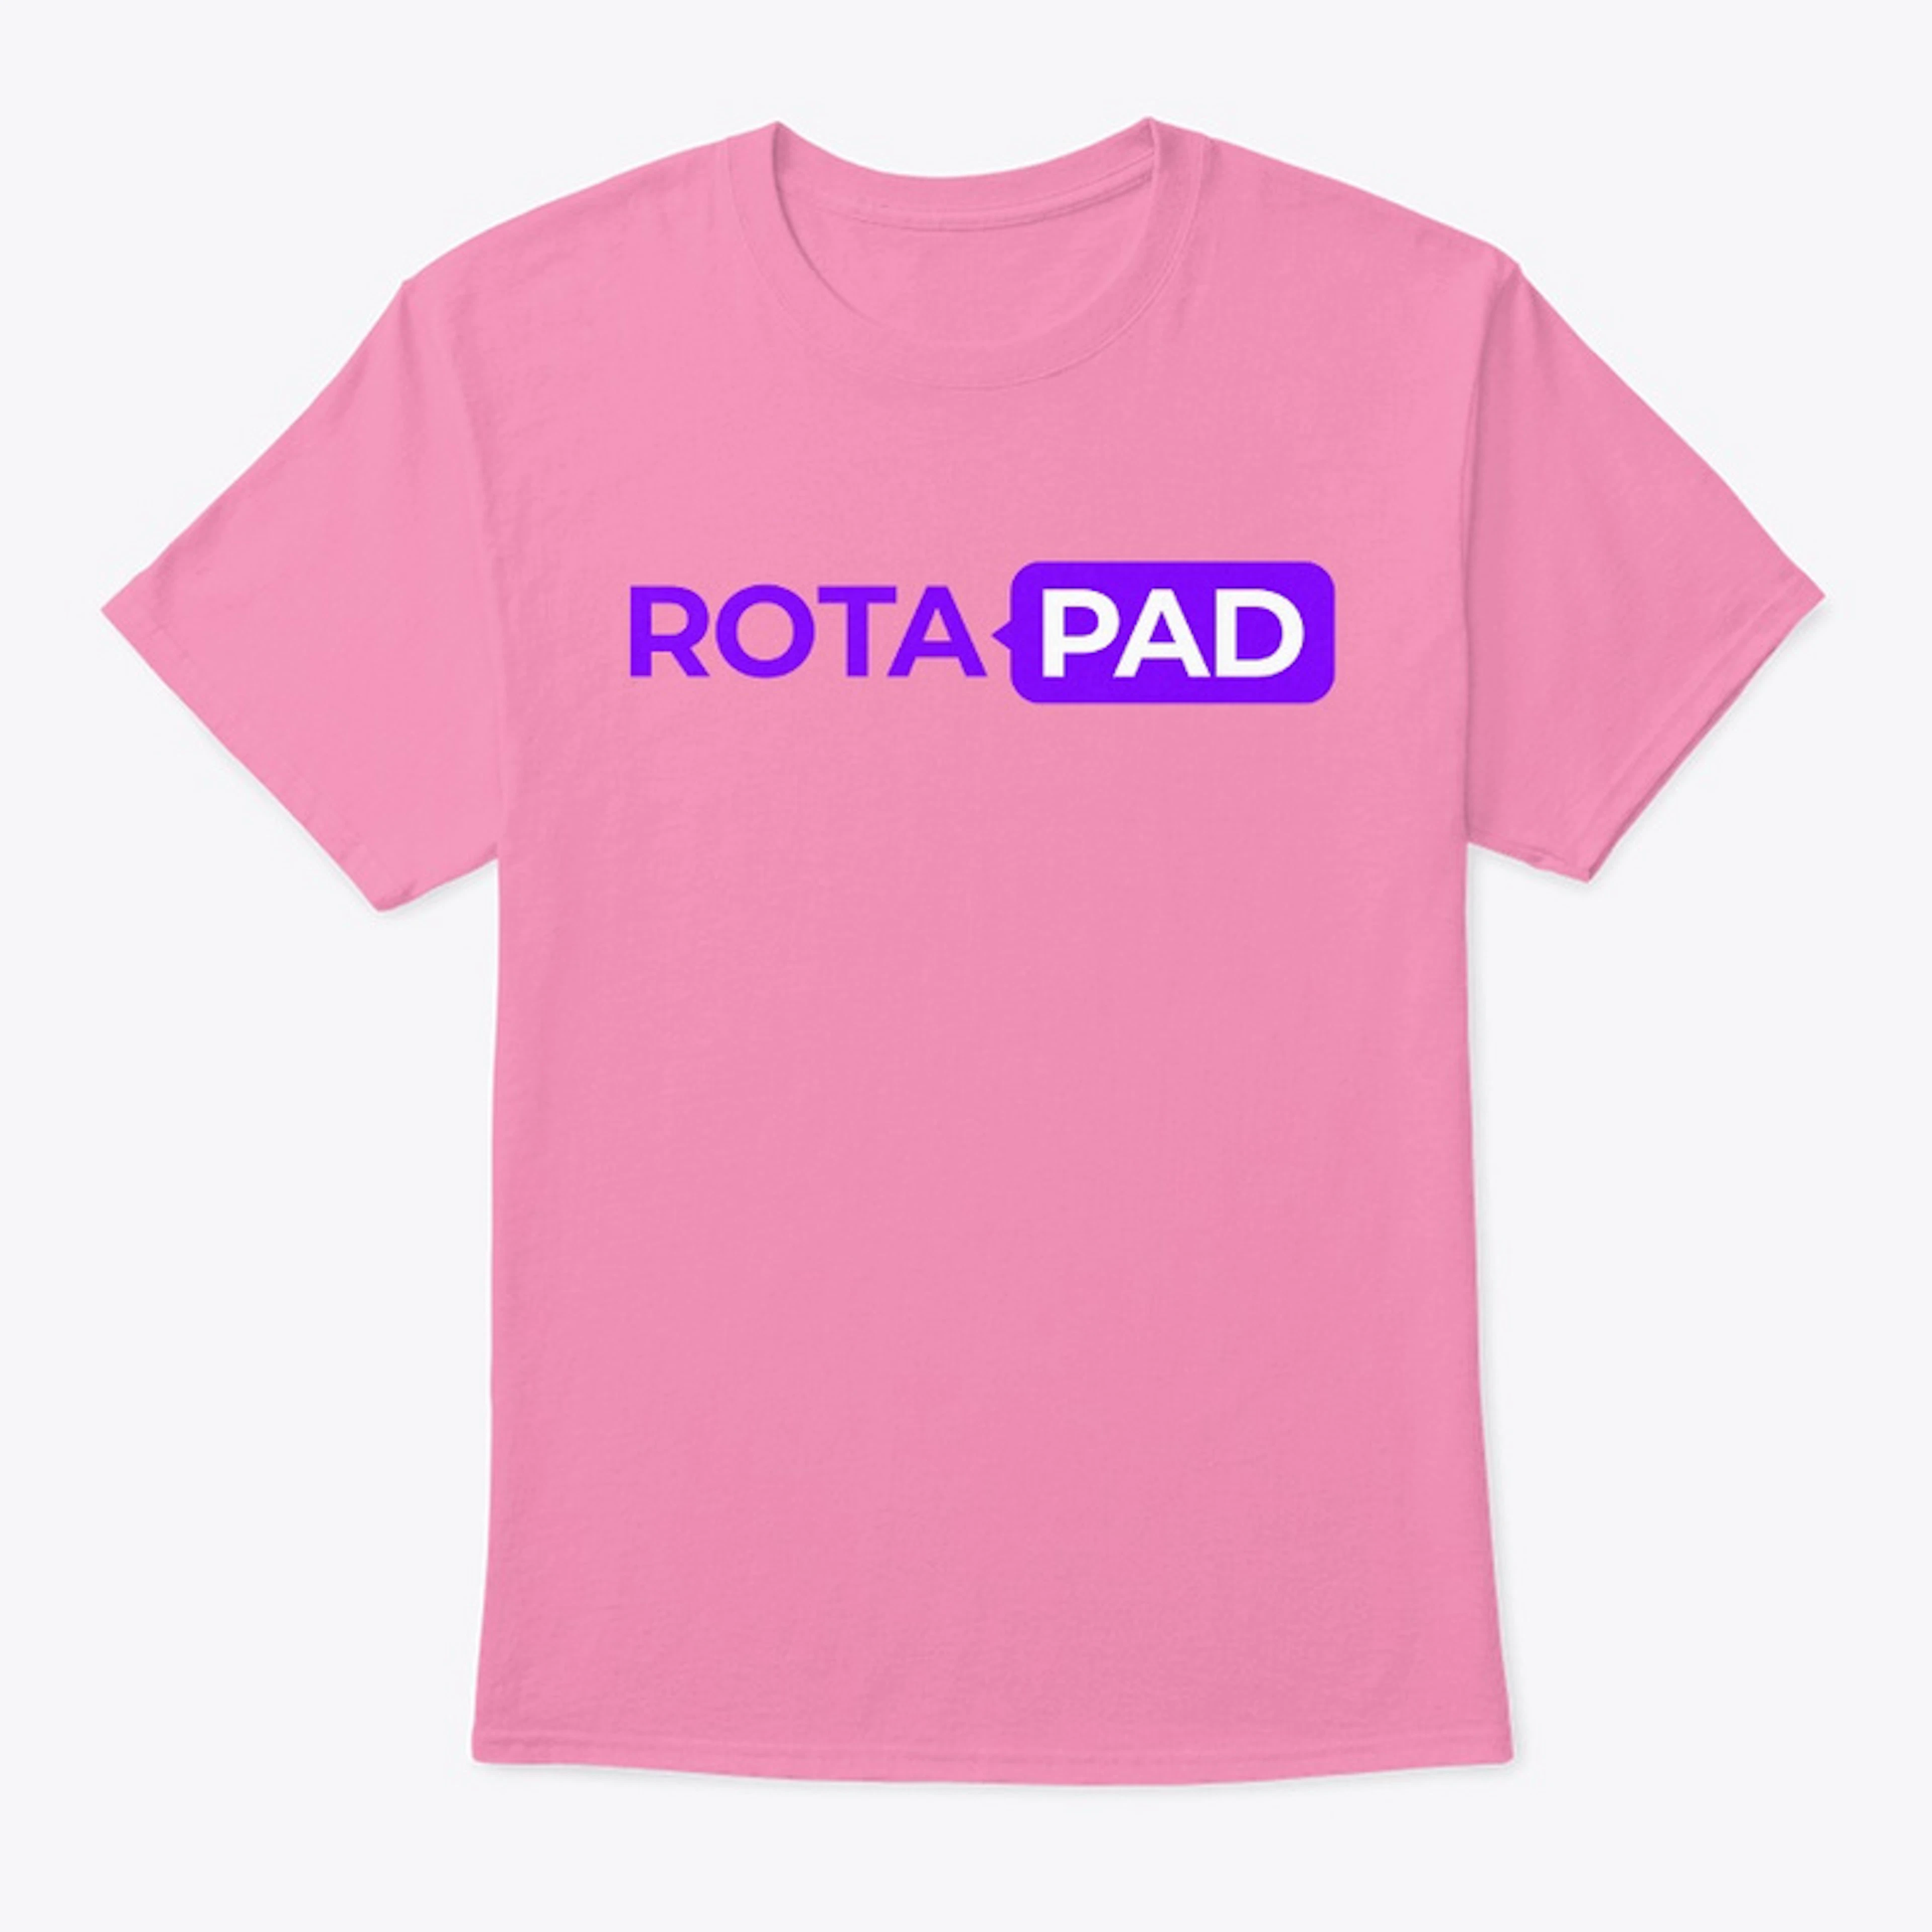 RotaPad